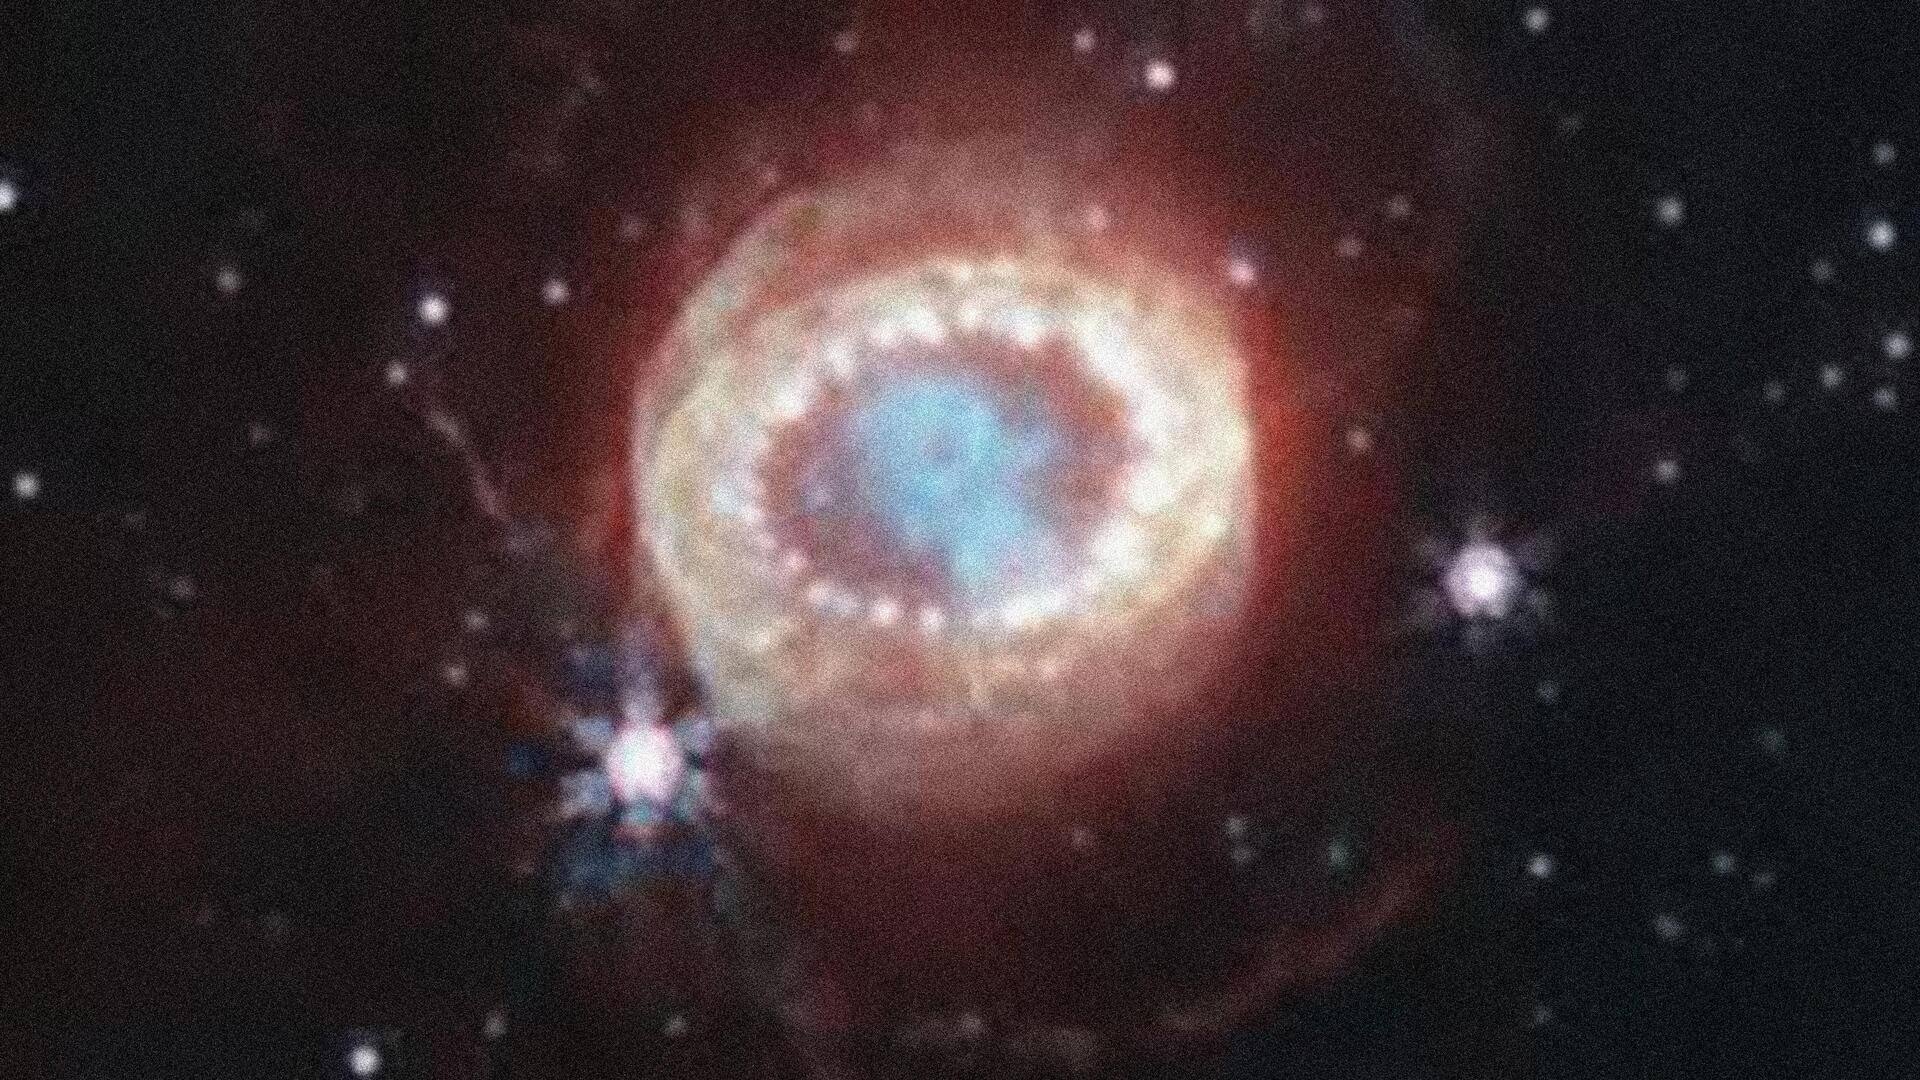 JSWT's latest image reveals stunning details of expanding supernova remnants